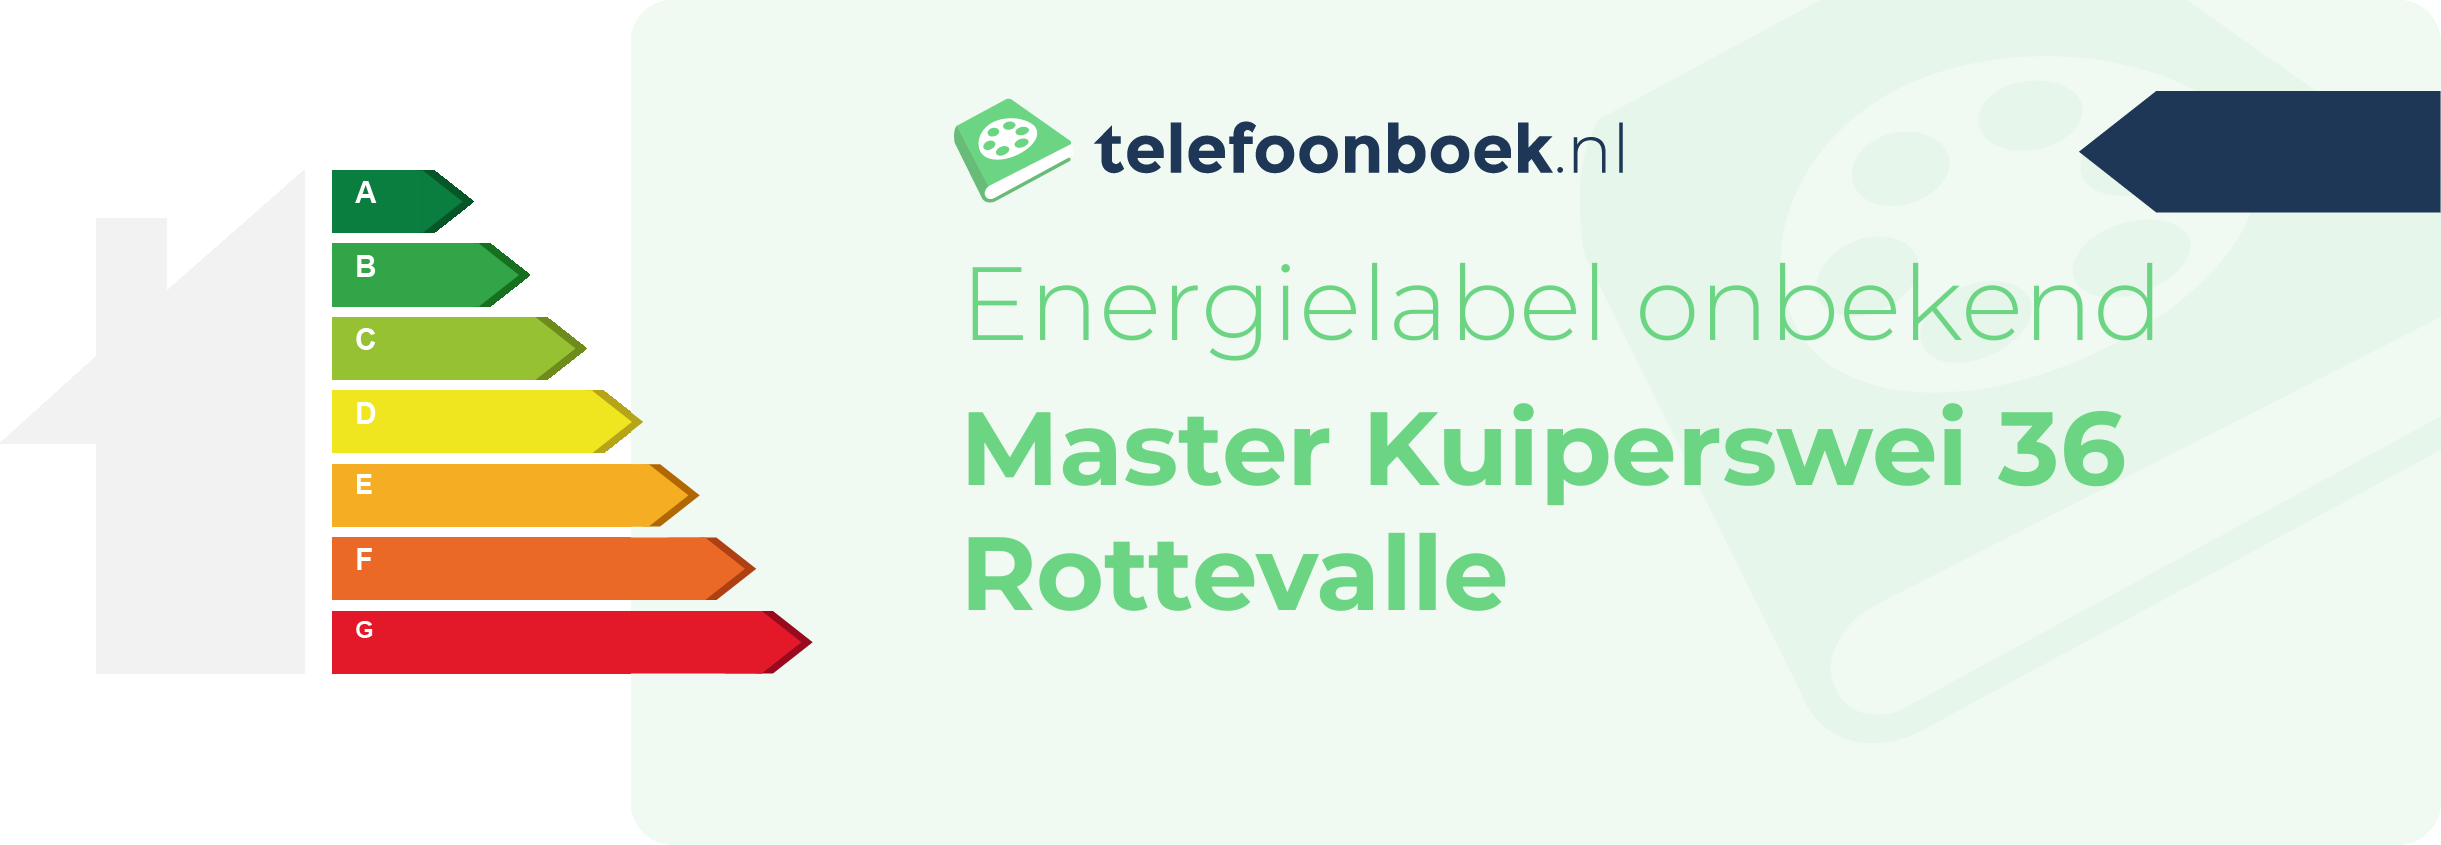 Energielabel Master Kuiperswei 36 Rottevalle